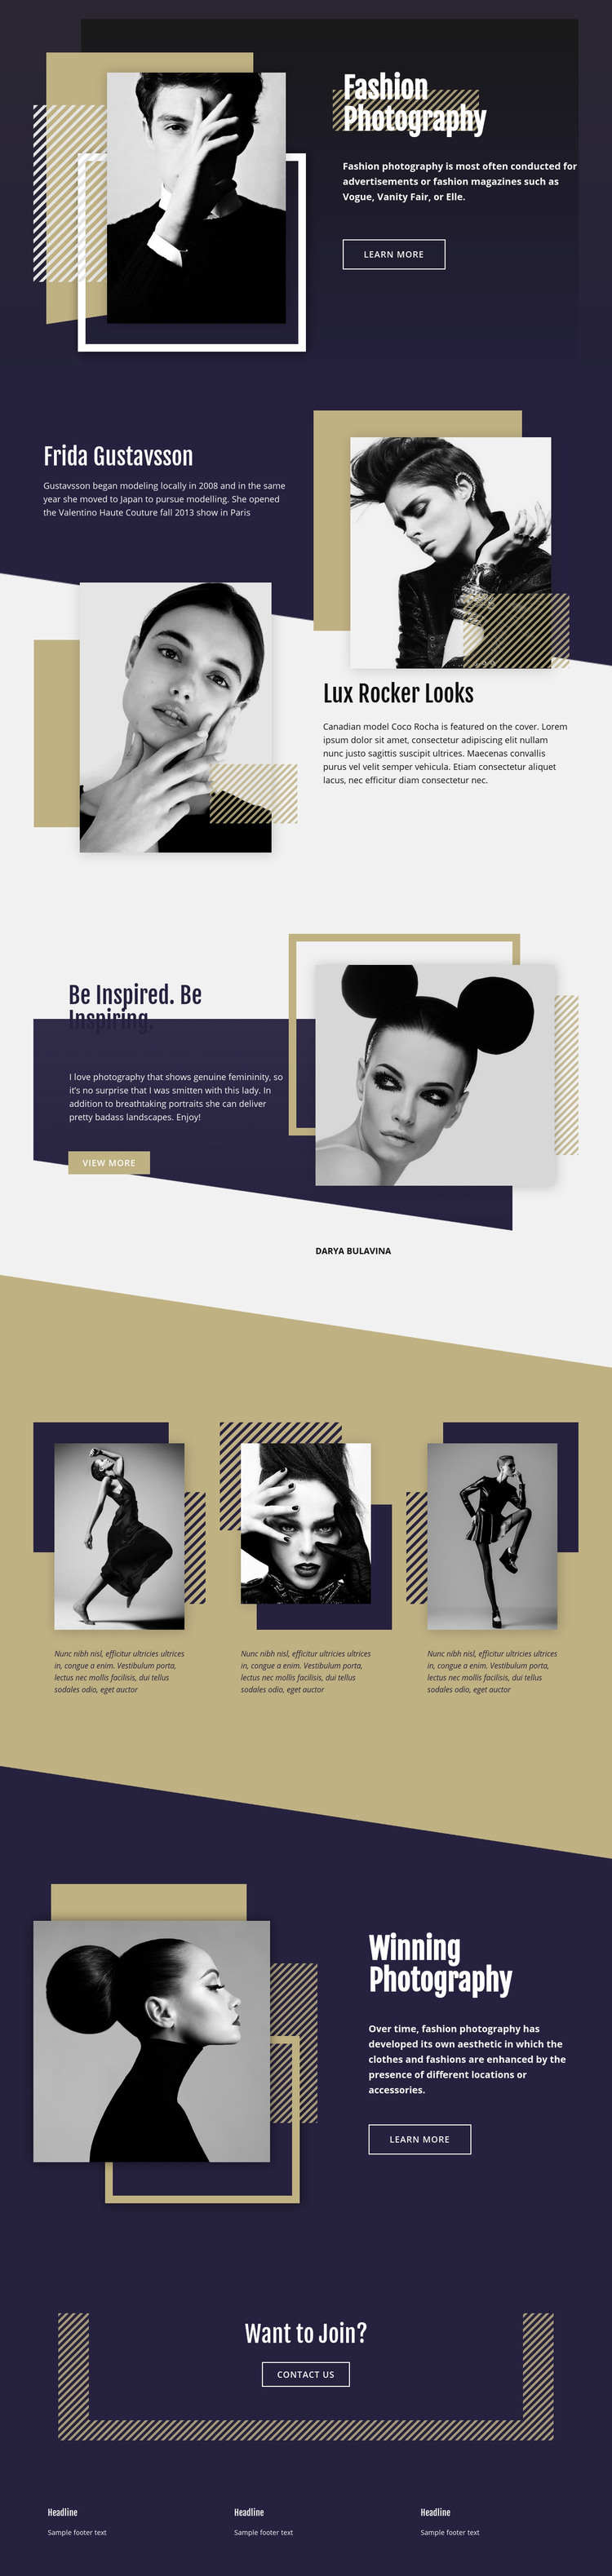 Fashion Photography Homepage Design